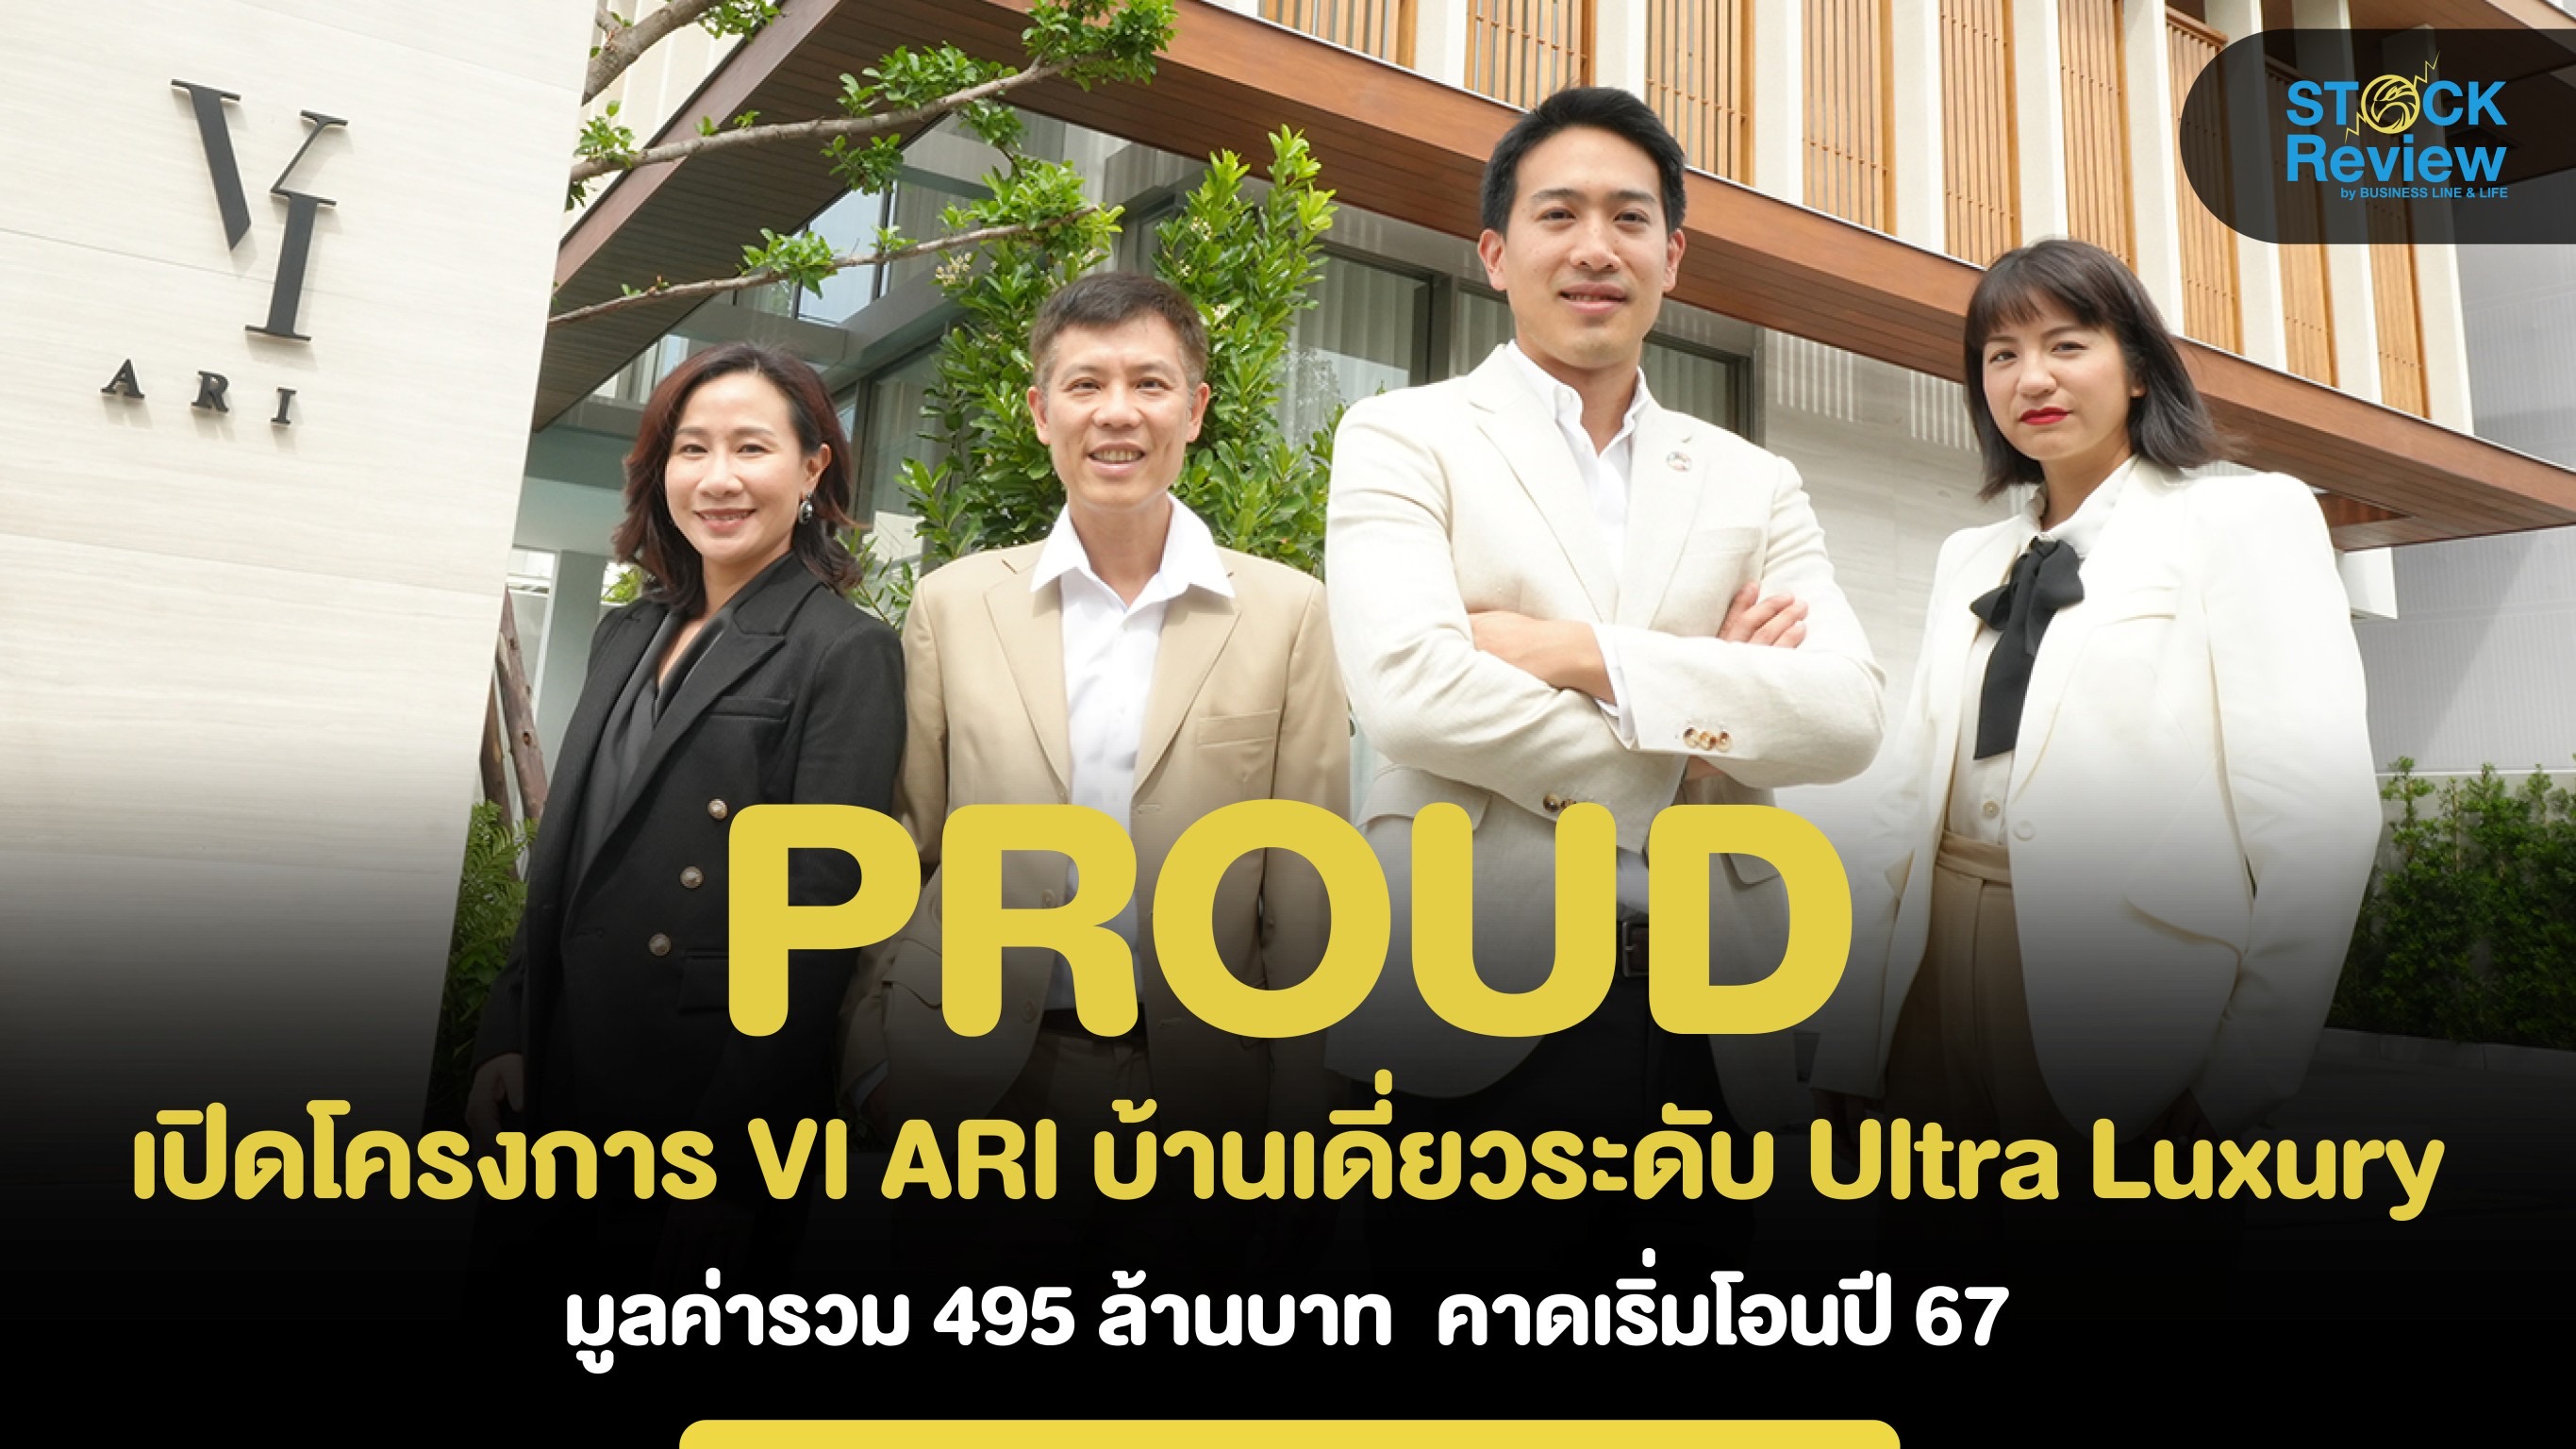 PROUD เปิดโครงการ VI ARI บ้านเดี่ยวระดับ Ultra Luxury ใจกลางอารีย์